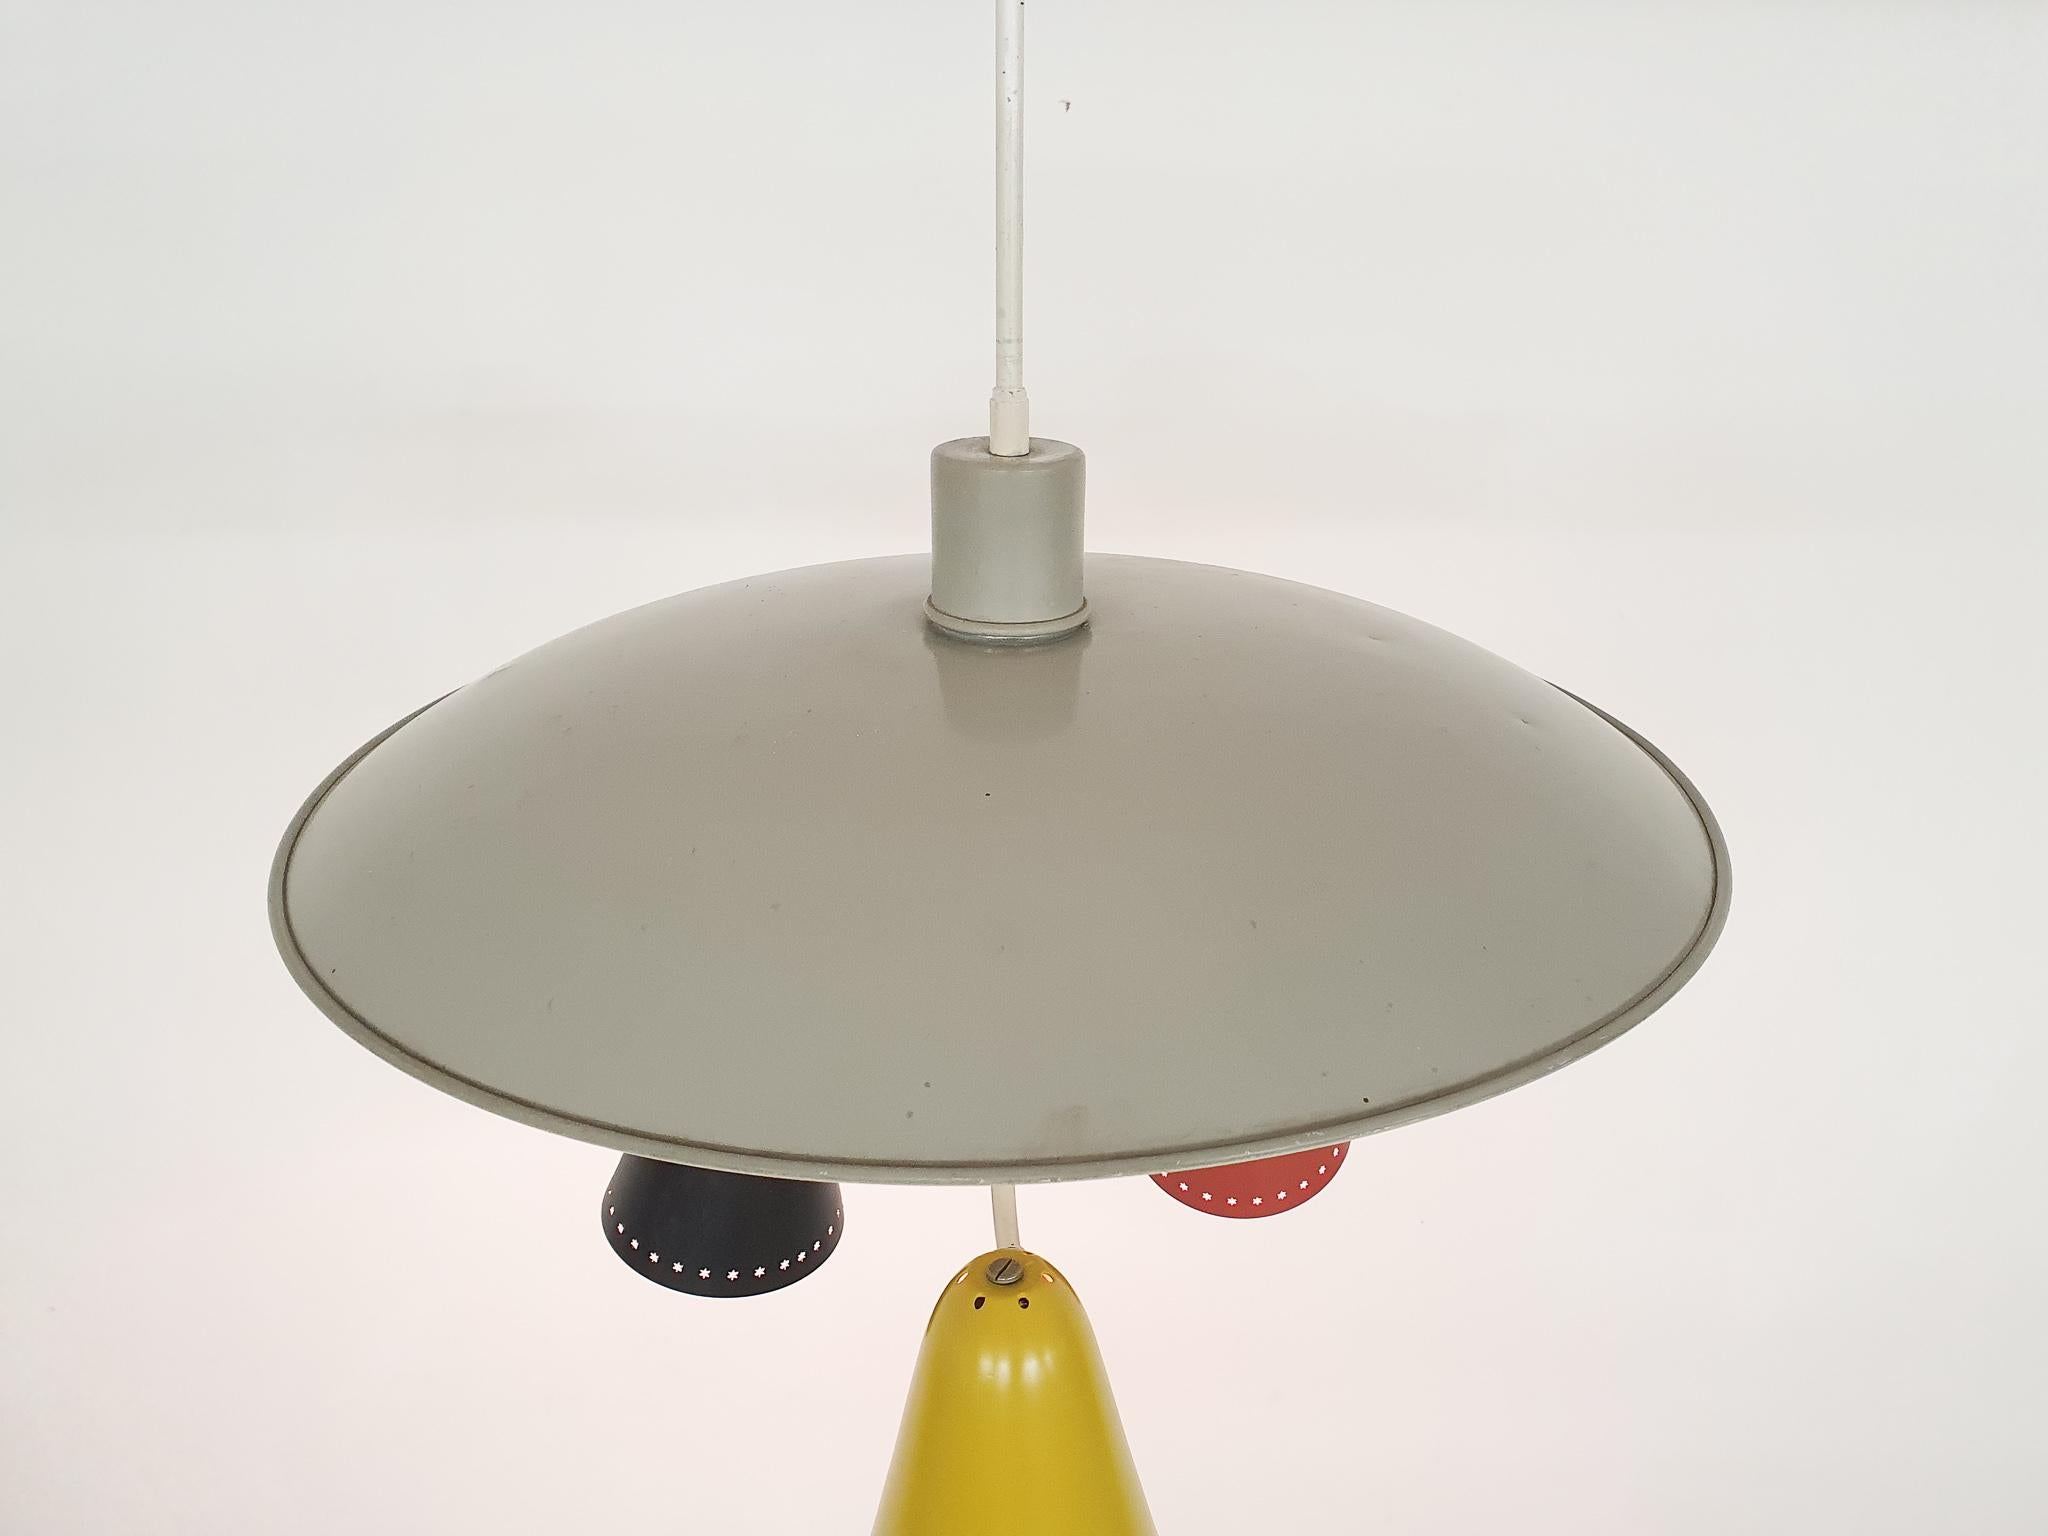 Metal T.H. Busquet for Hala pendant light, The Netherlands, 1955